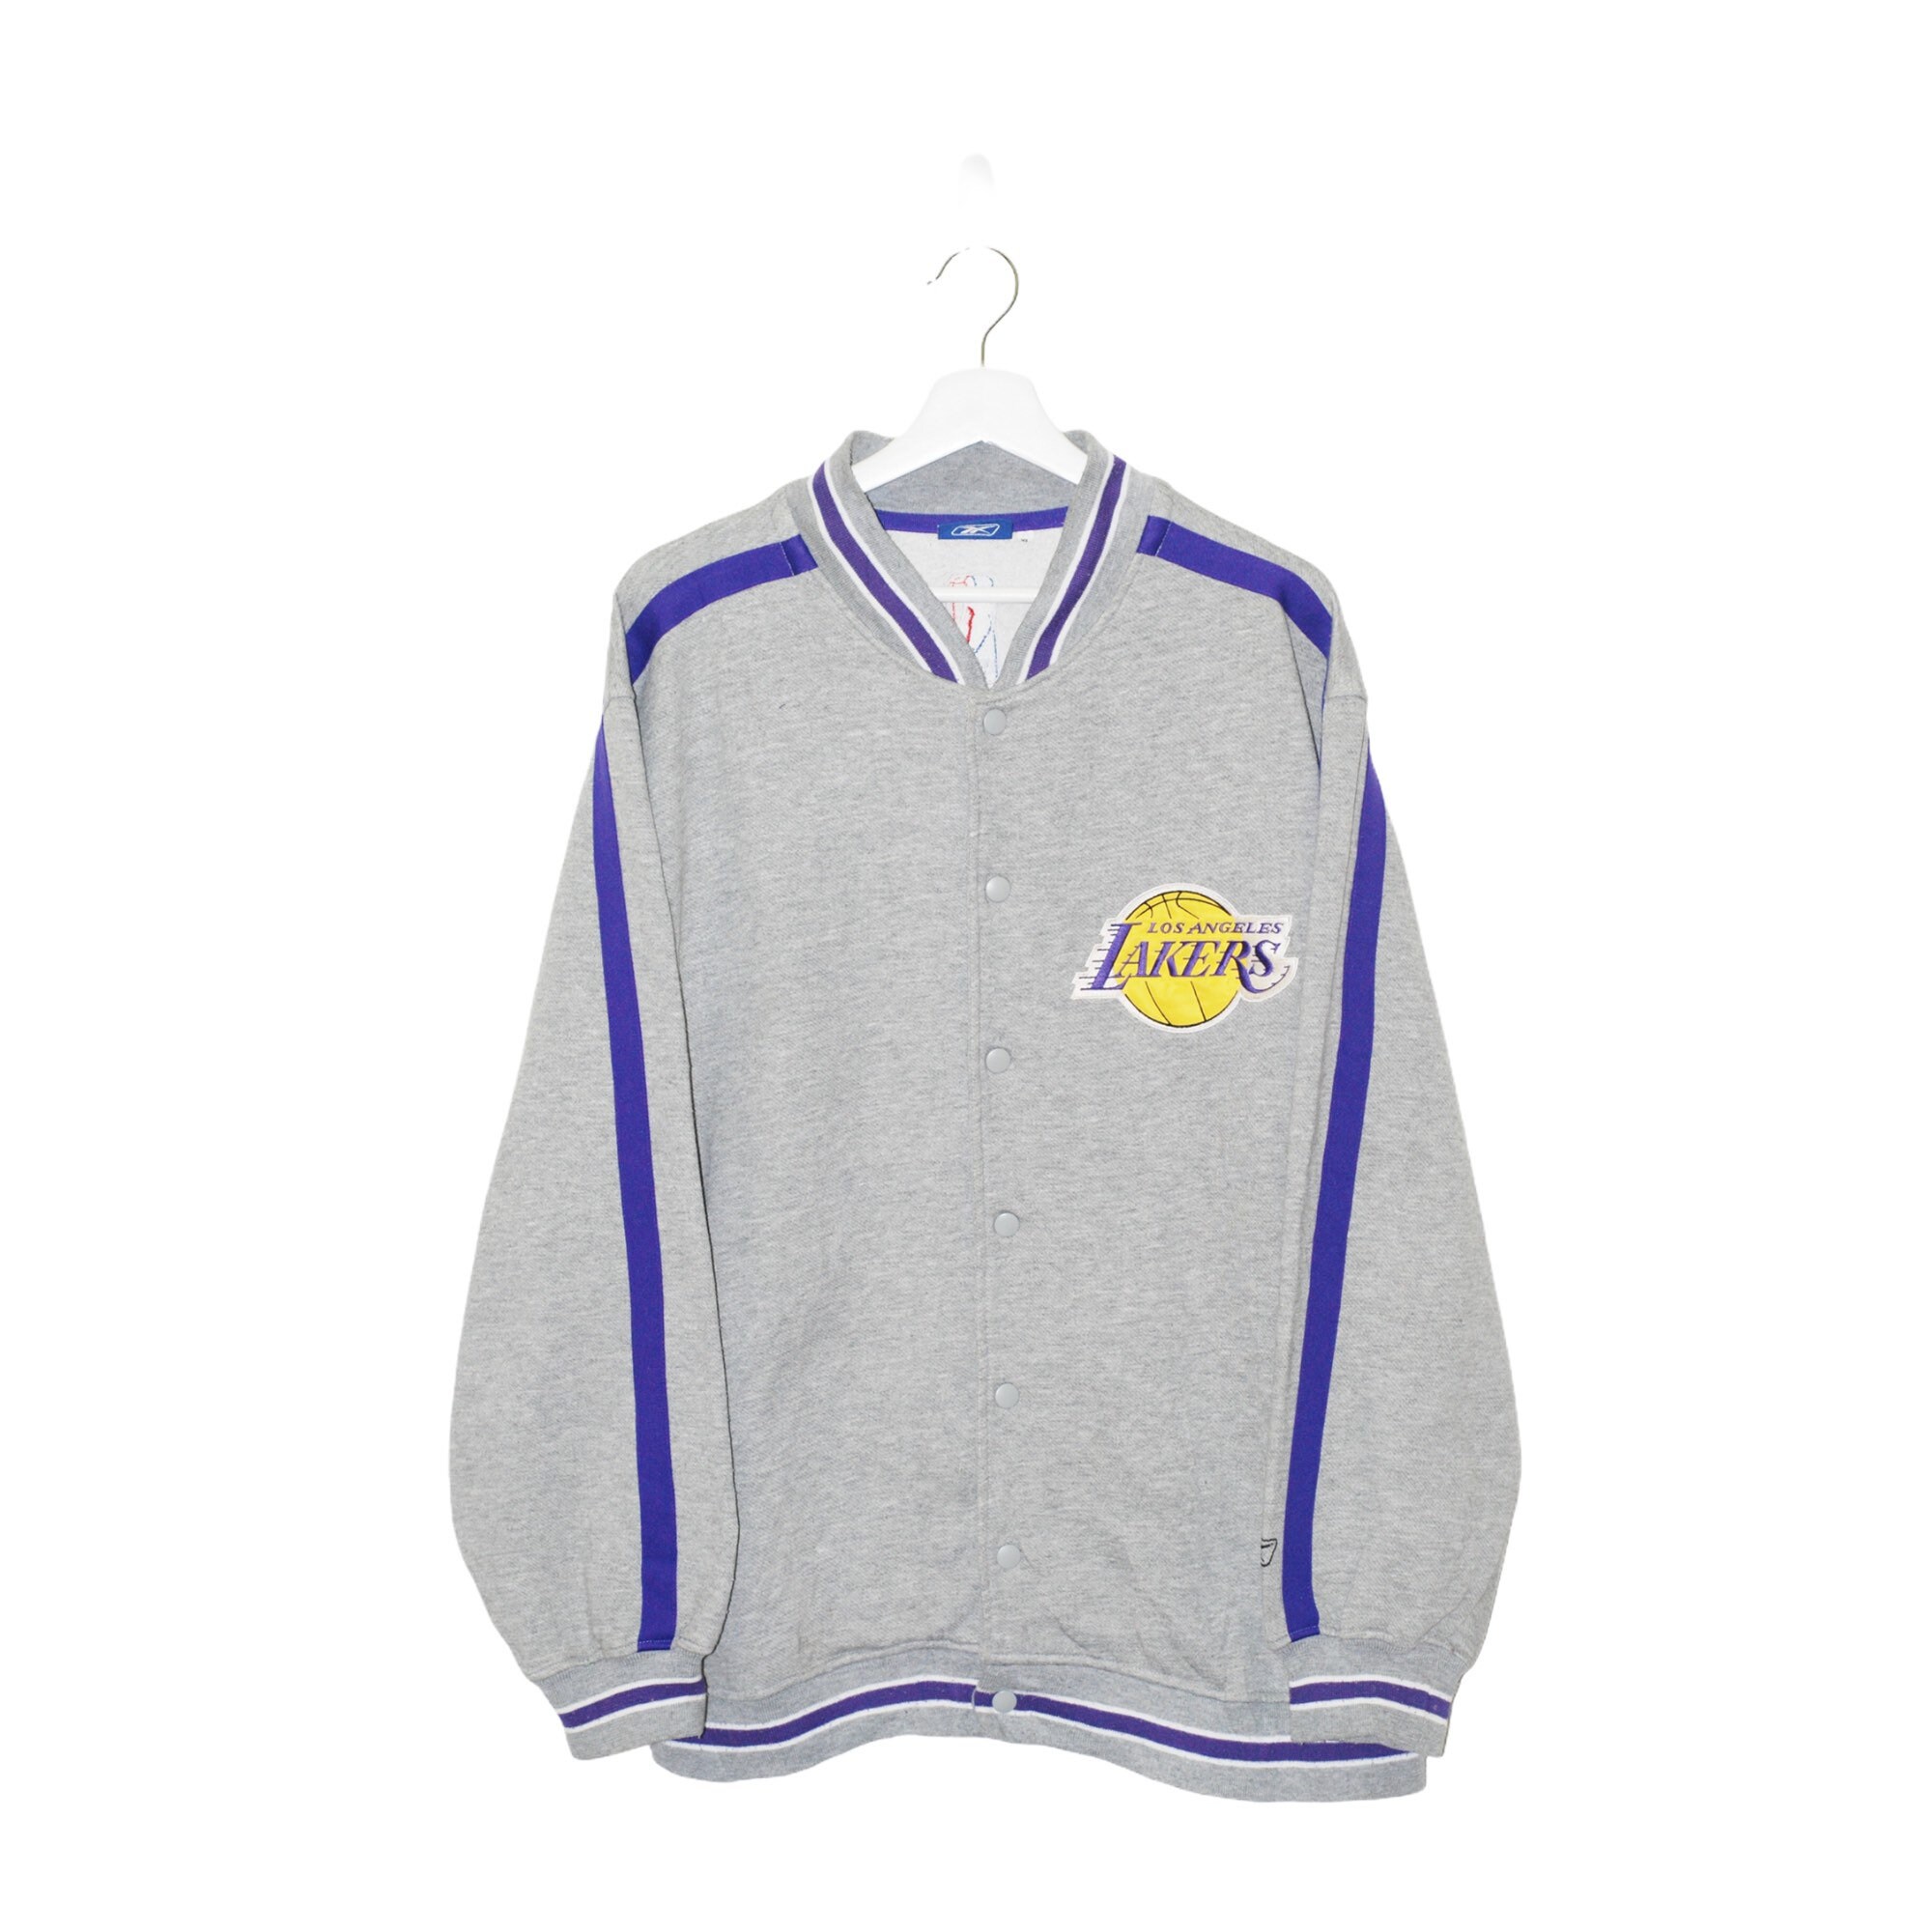 Bape x Mitchell & Ness Lakers Warm Up Jacket Rare Sz L NEW tags